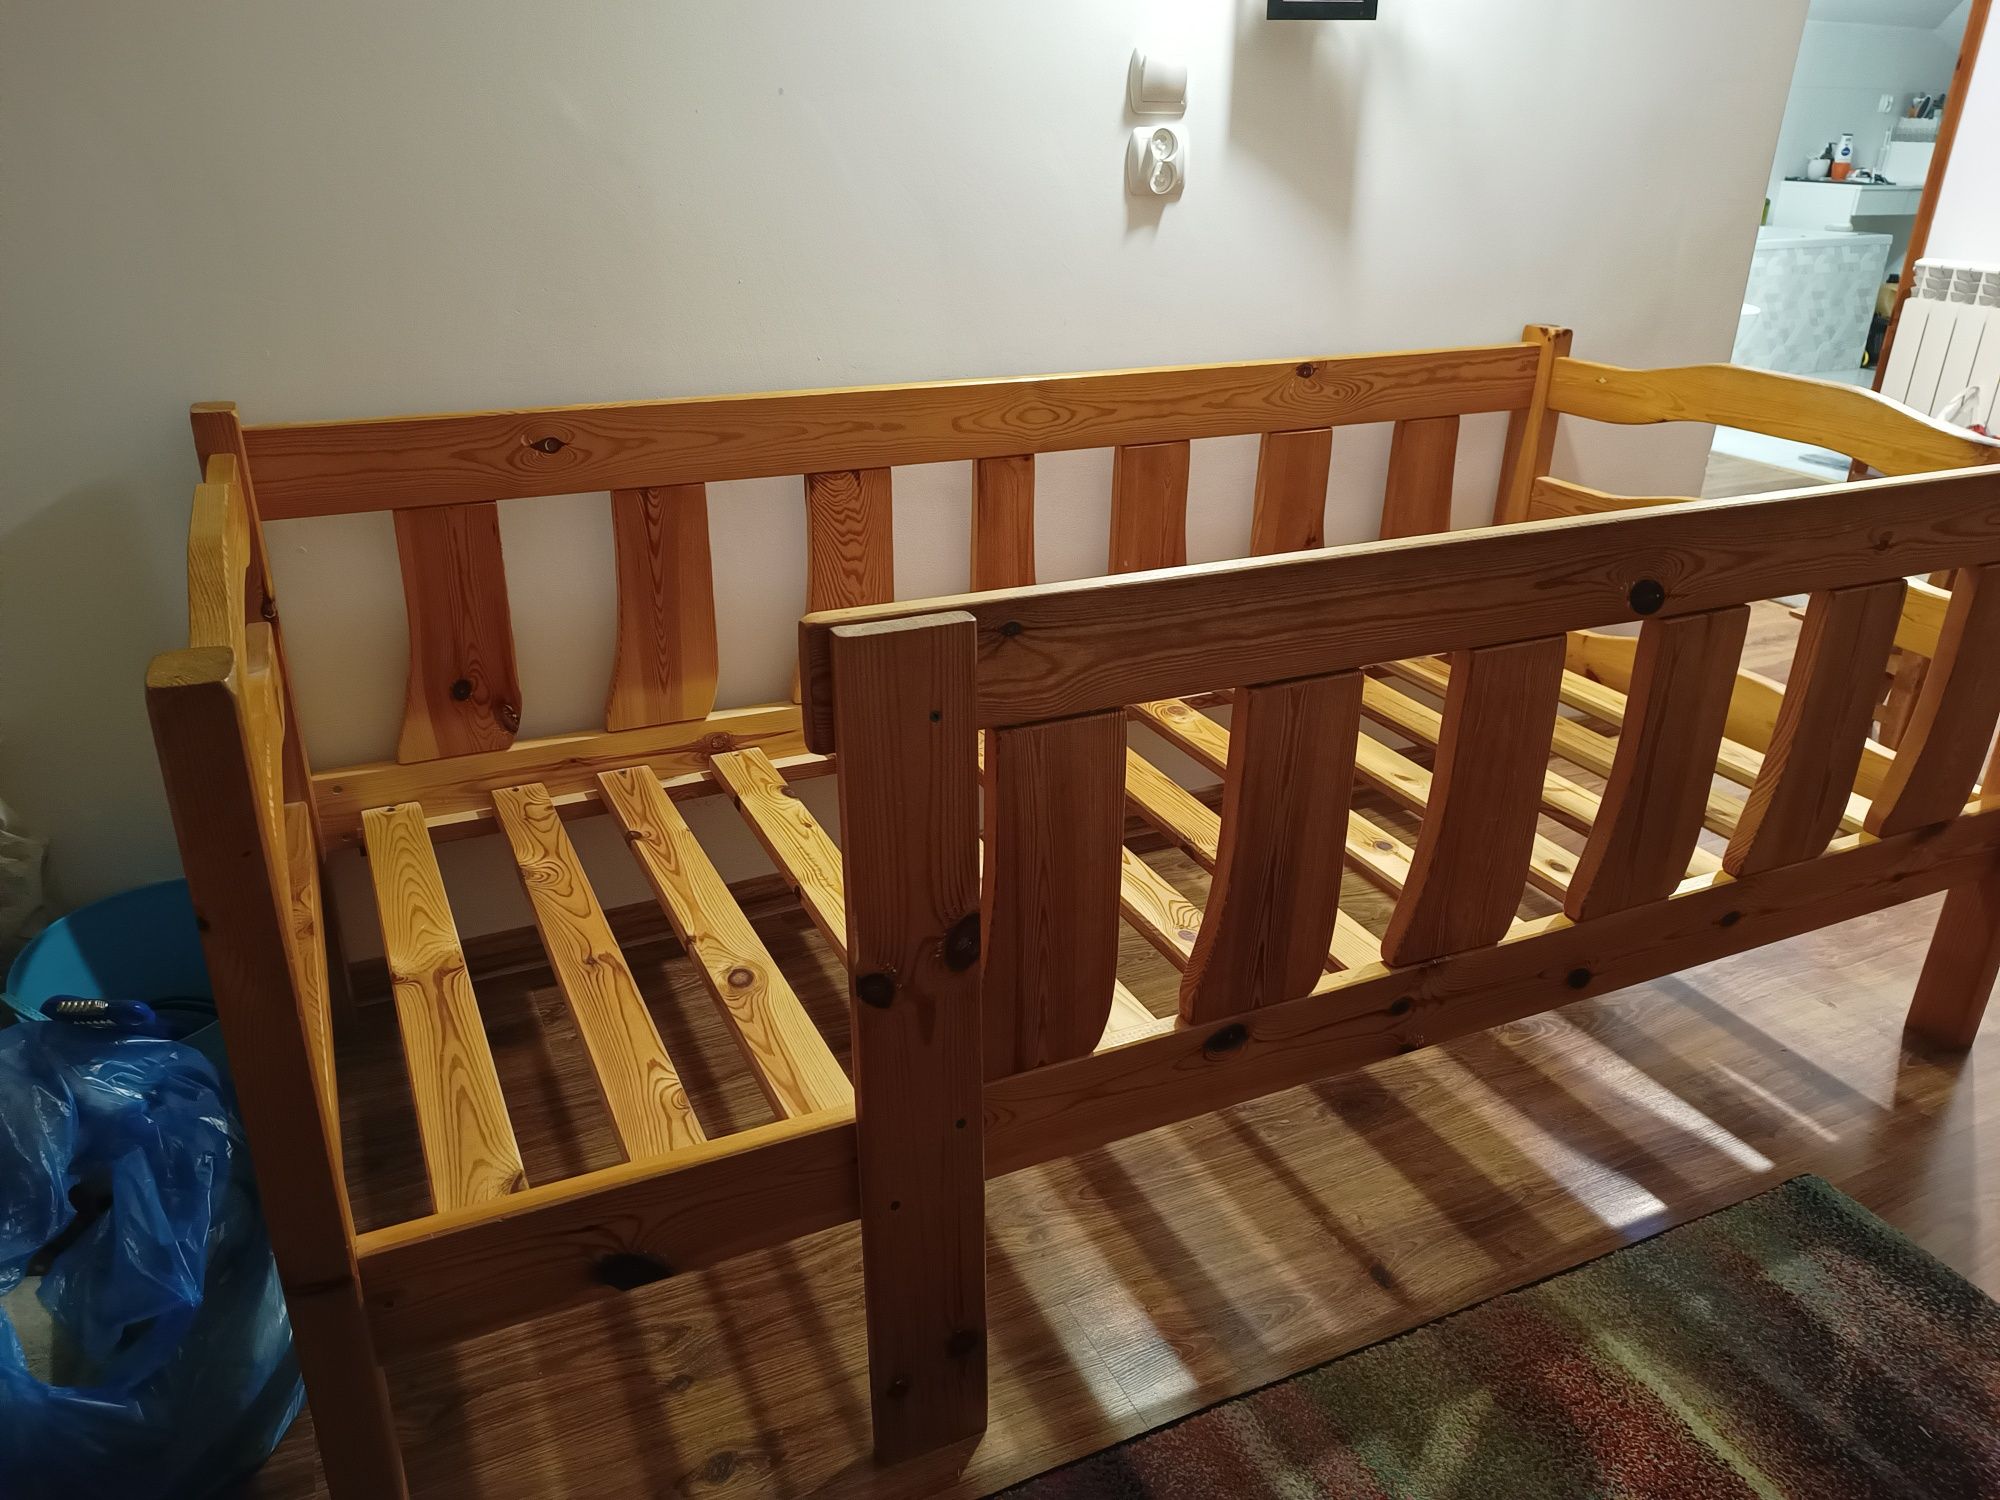 Łóżko drewniane + materac